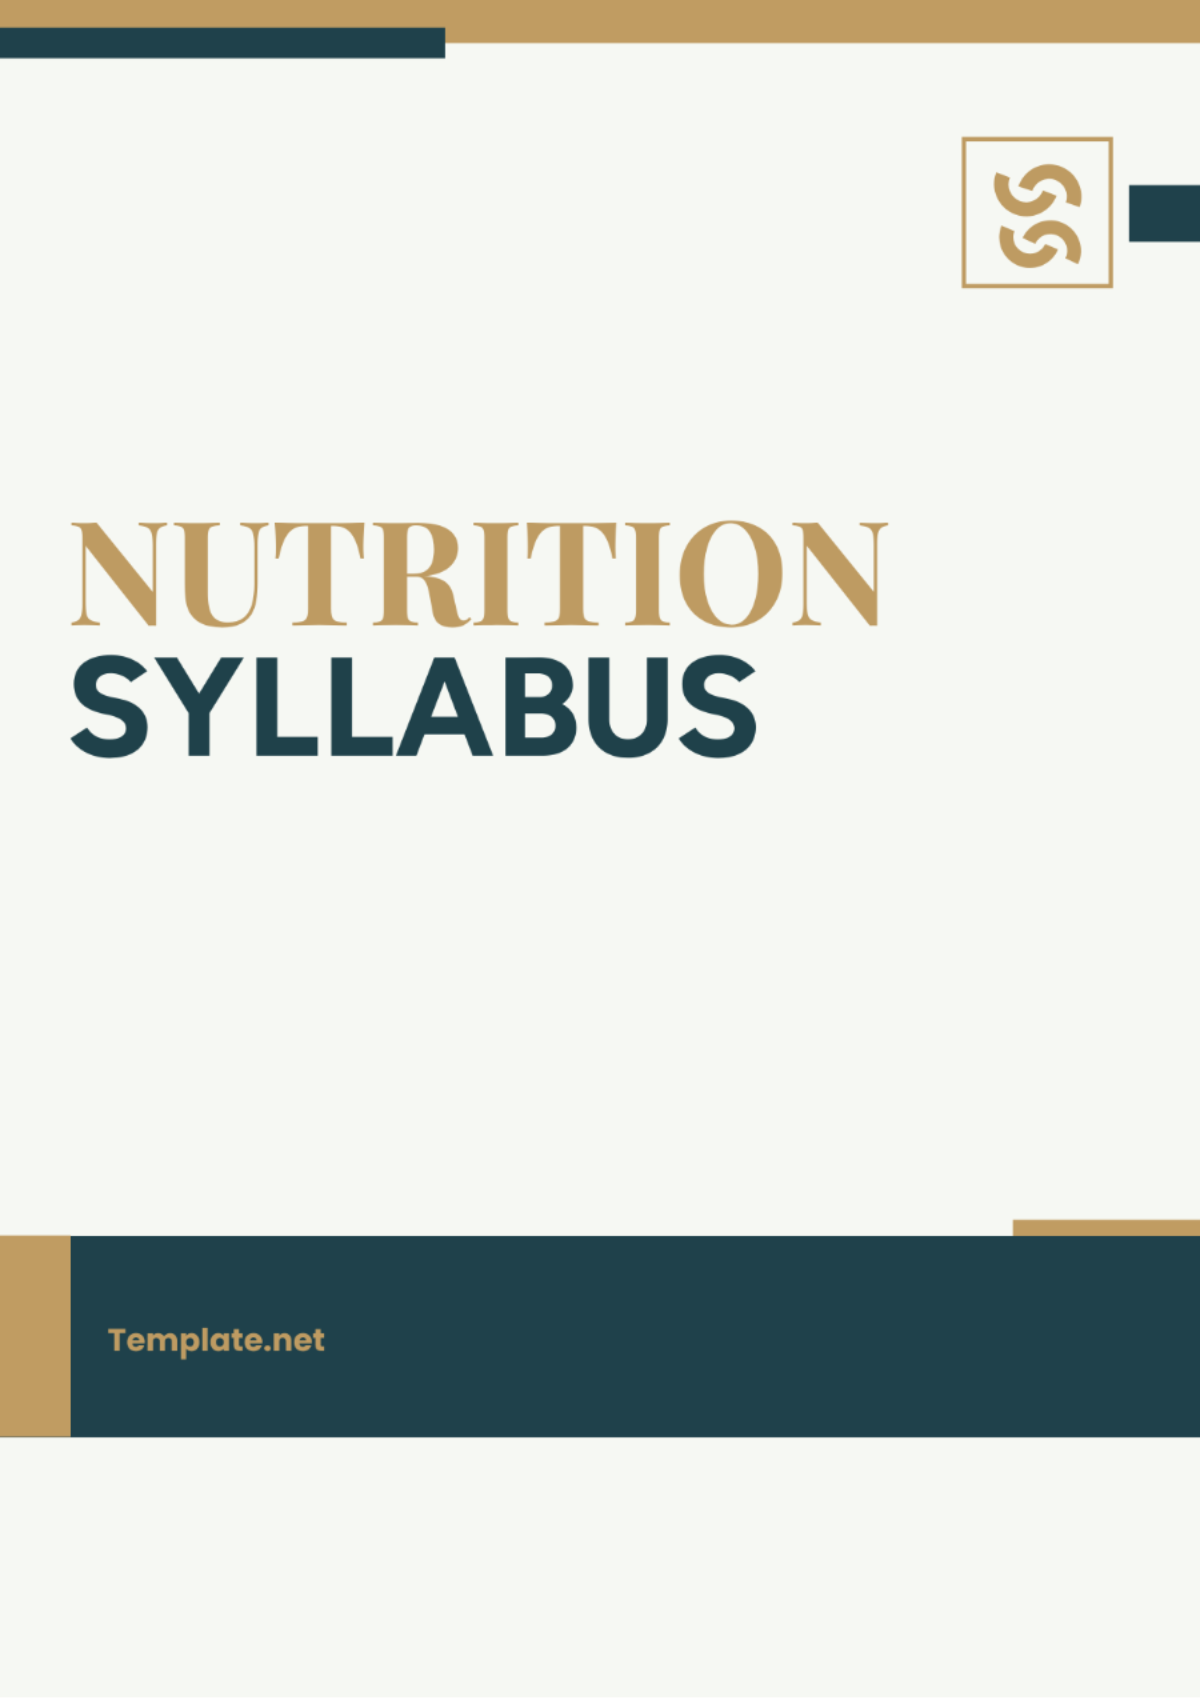 Nutrition Syllabus Template